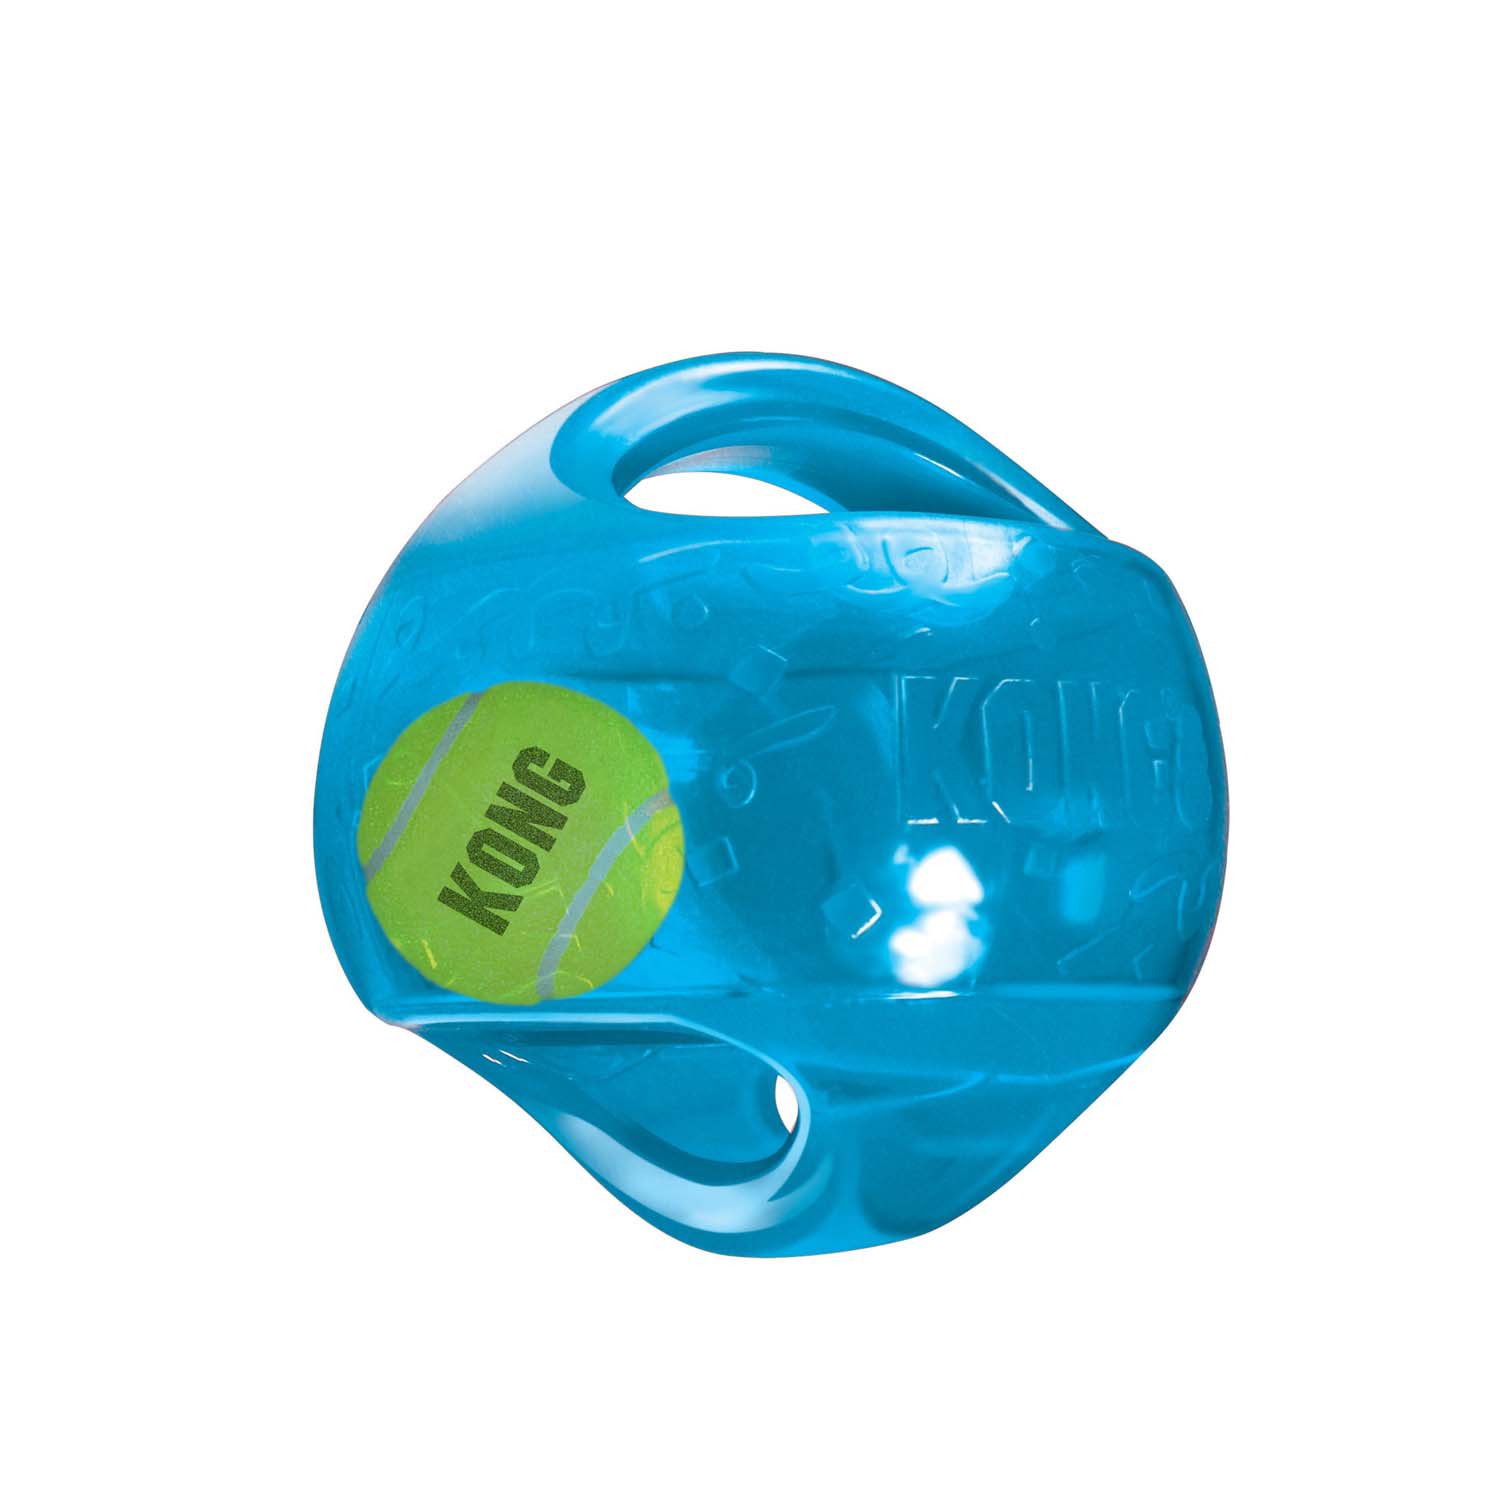 KONG Jumbler Ball Dog Toy, Medium, Assorted